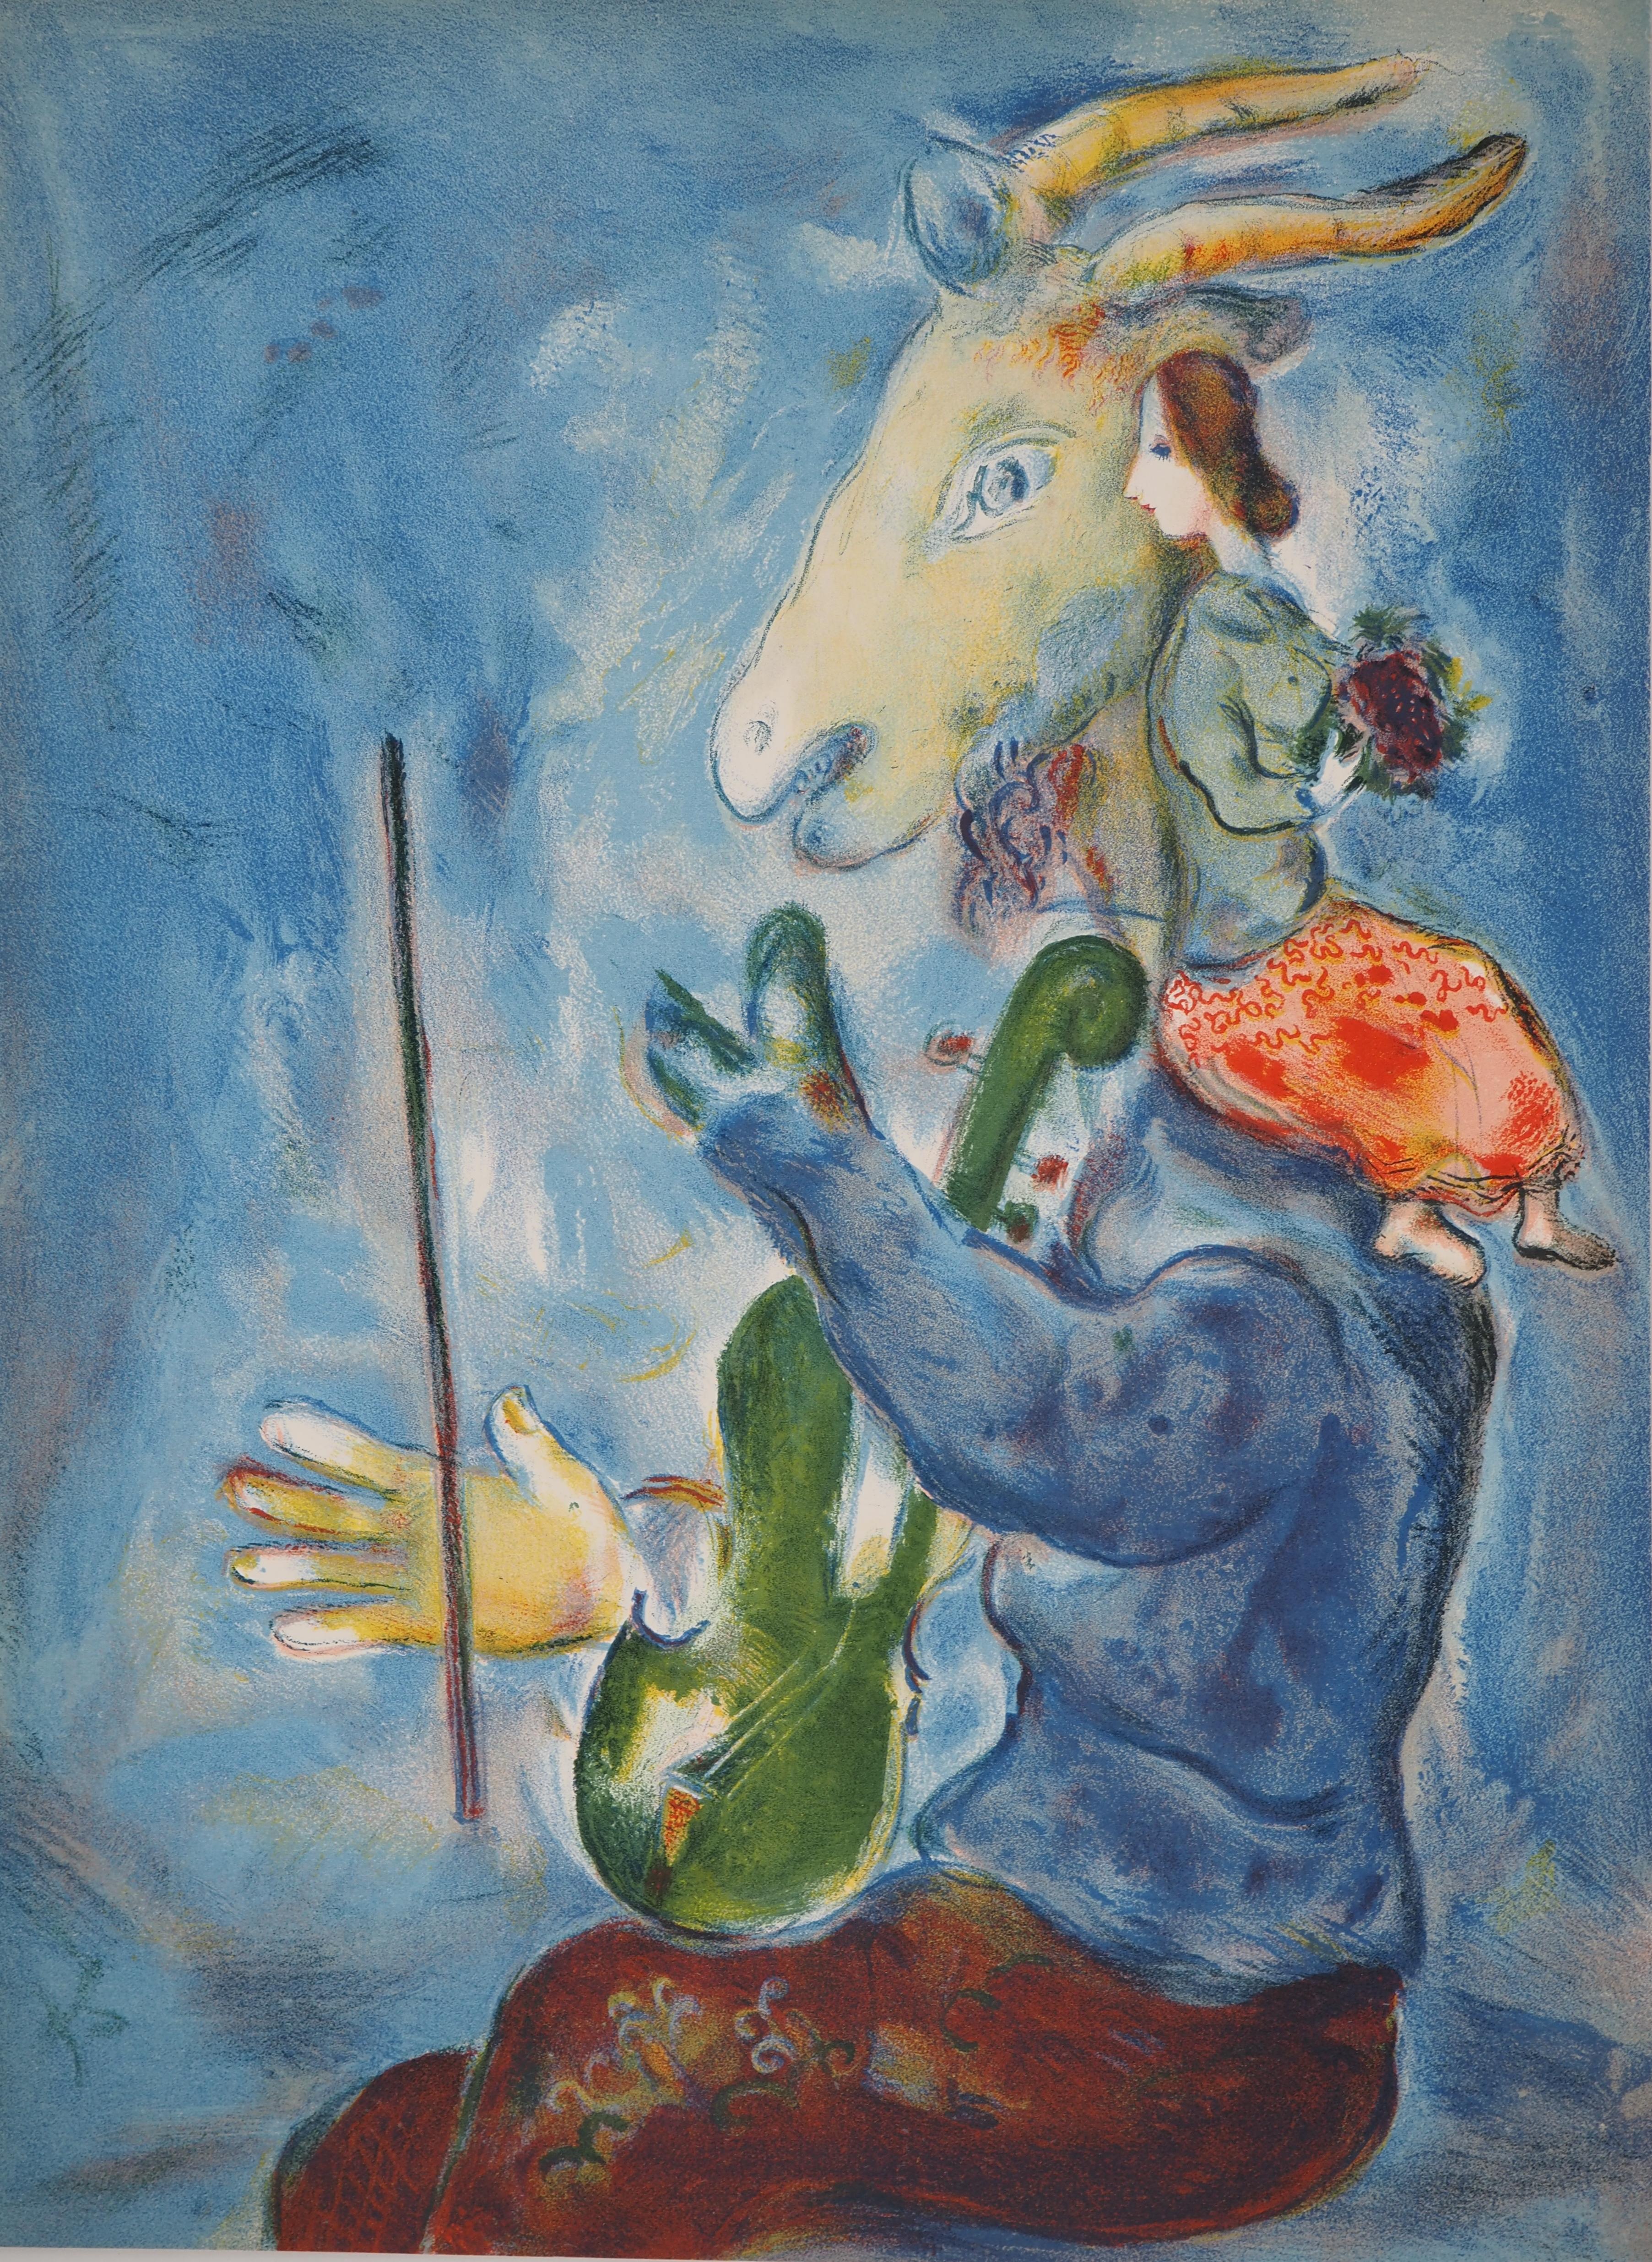 Where was Marc Chagall born?